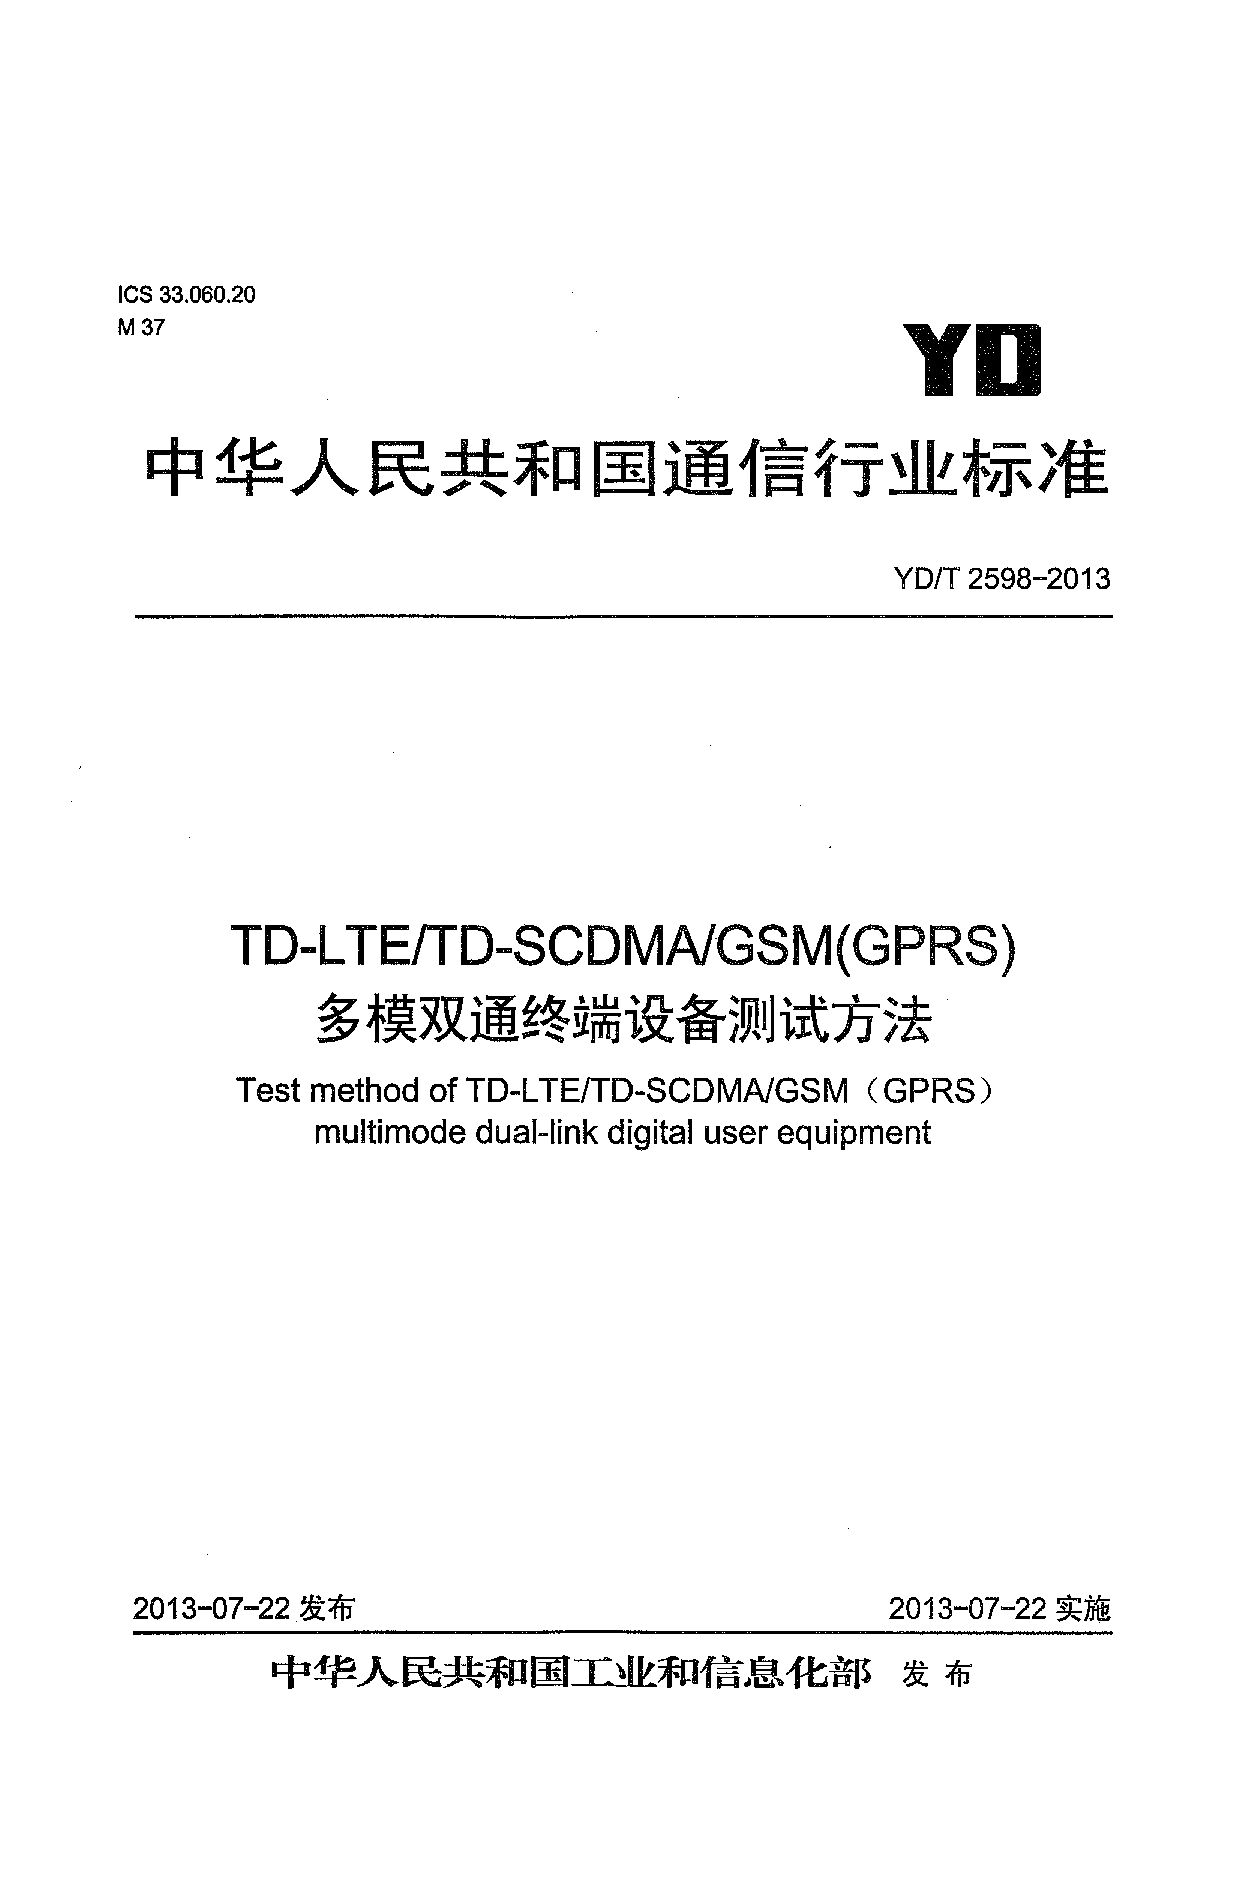 YD/T 2598-2013封面图